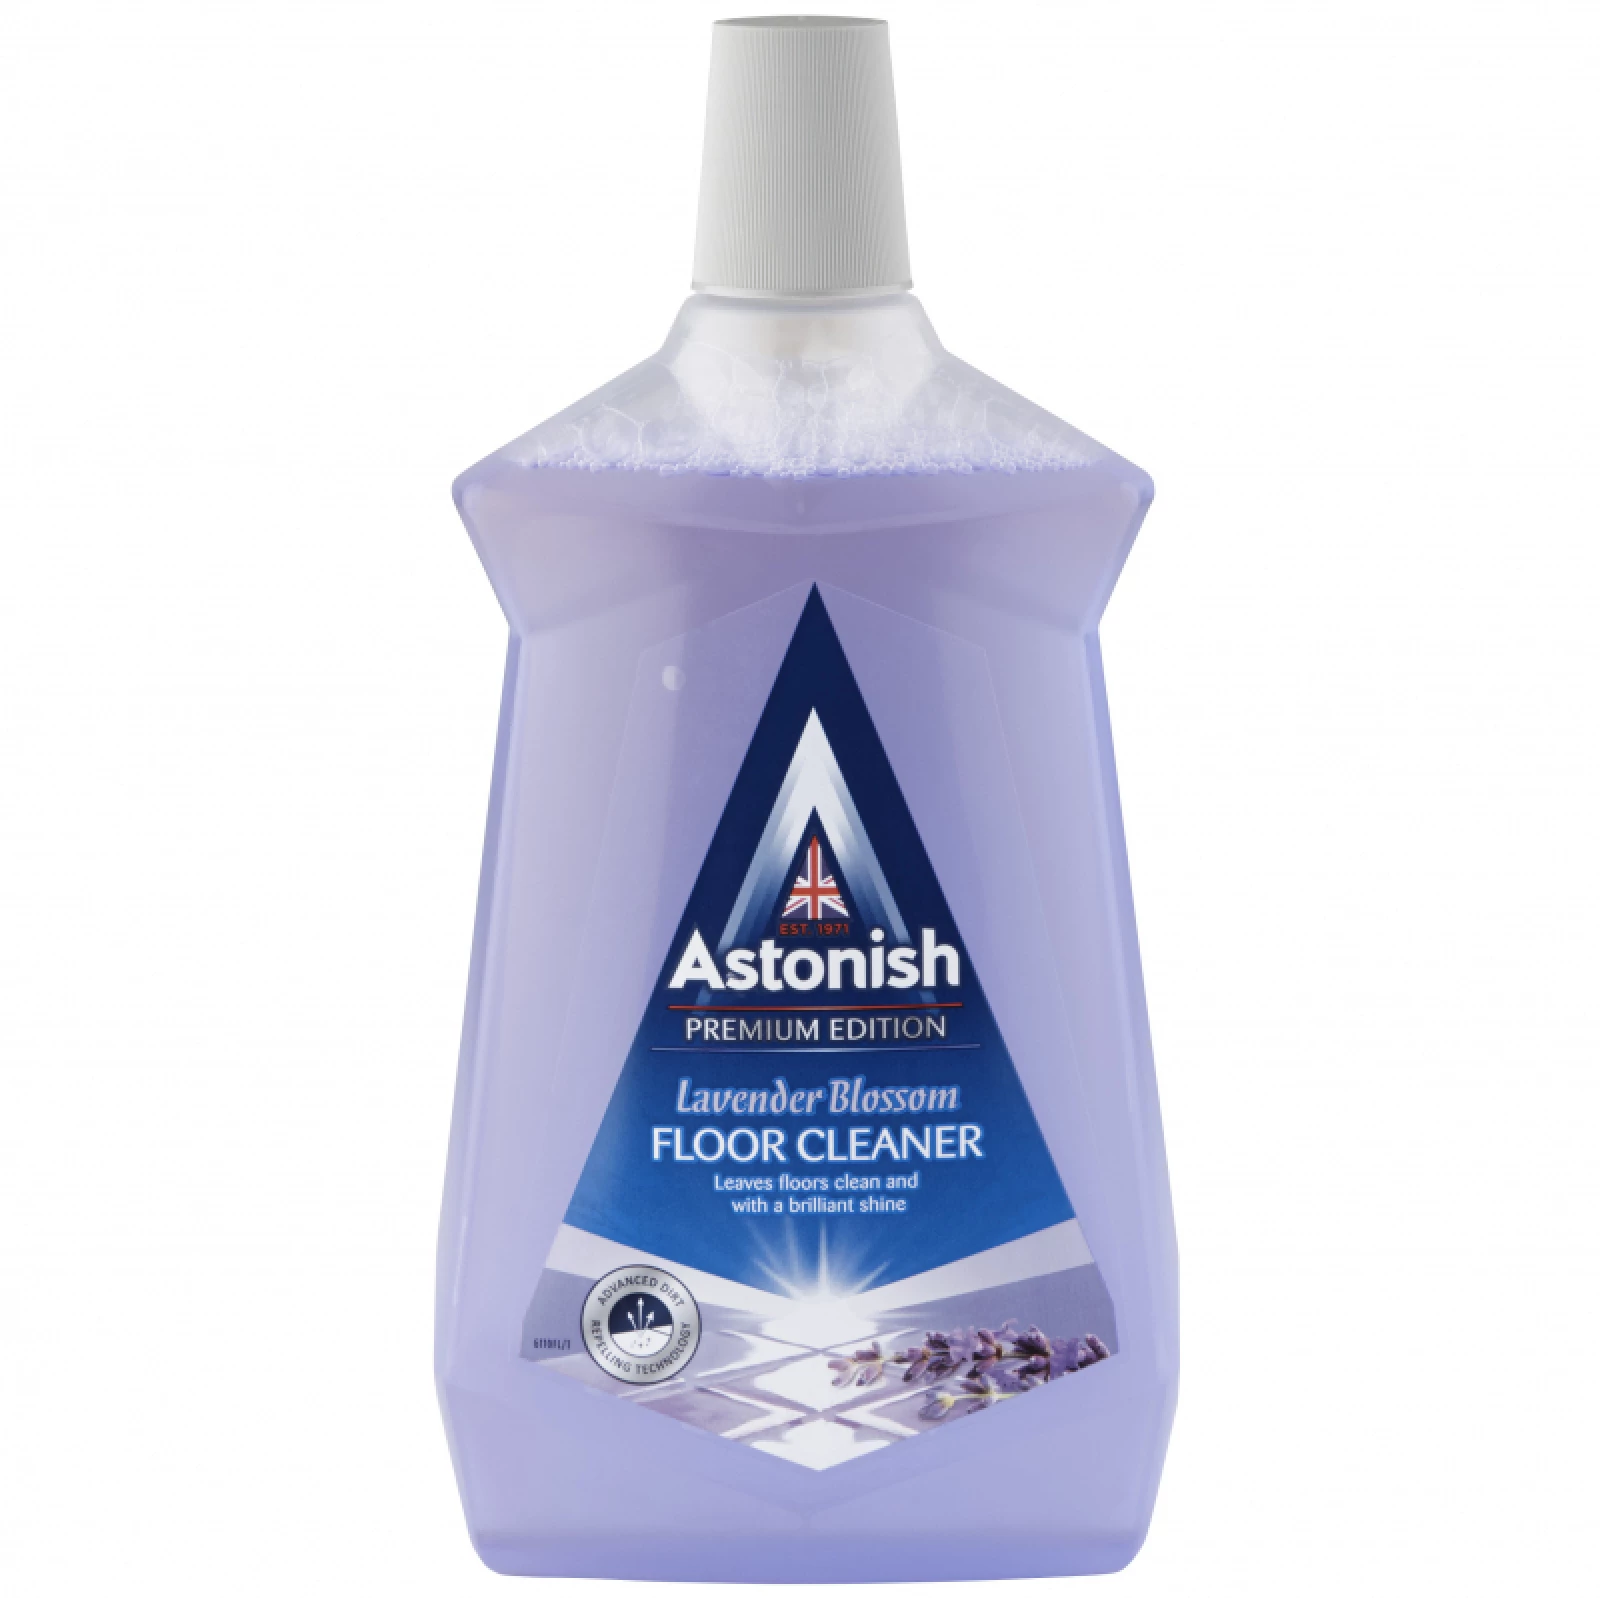 Nước lau sàn hoa oải hương Astonish C6110